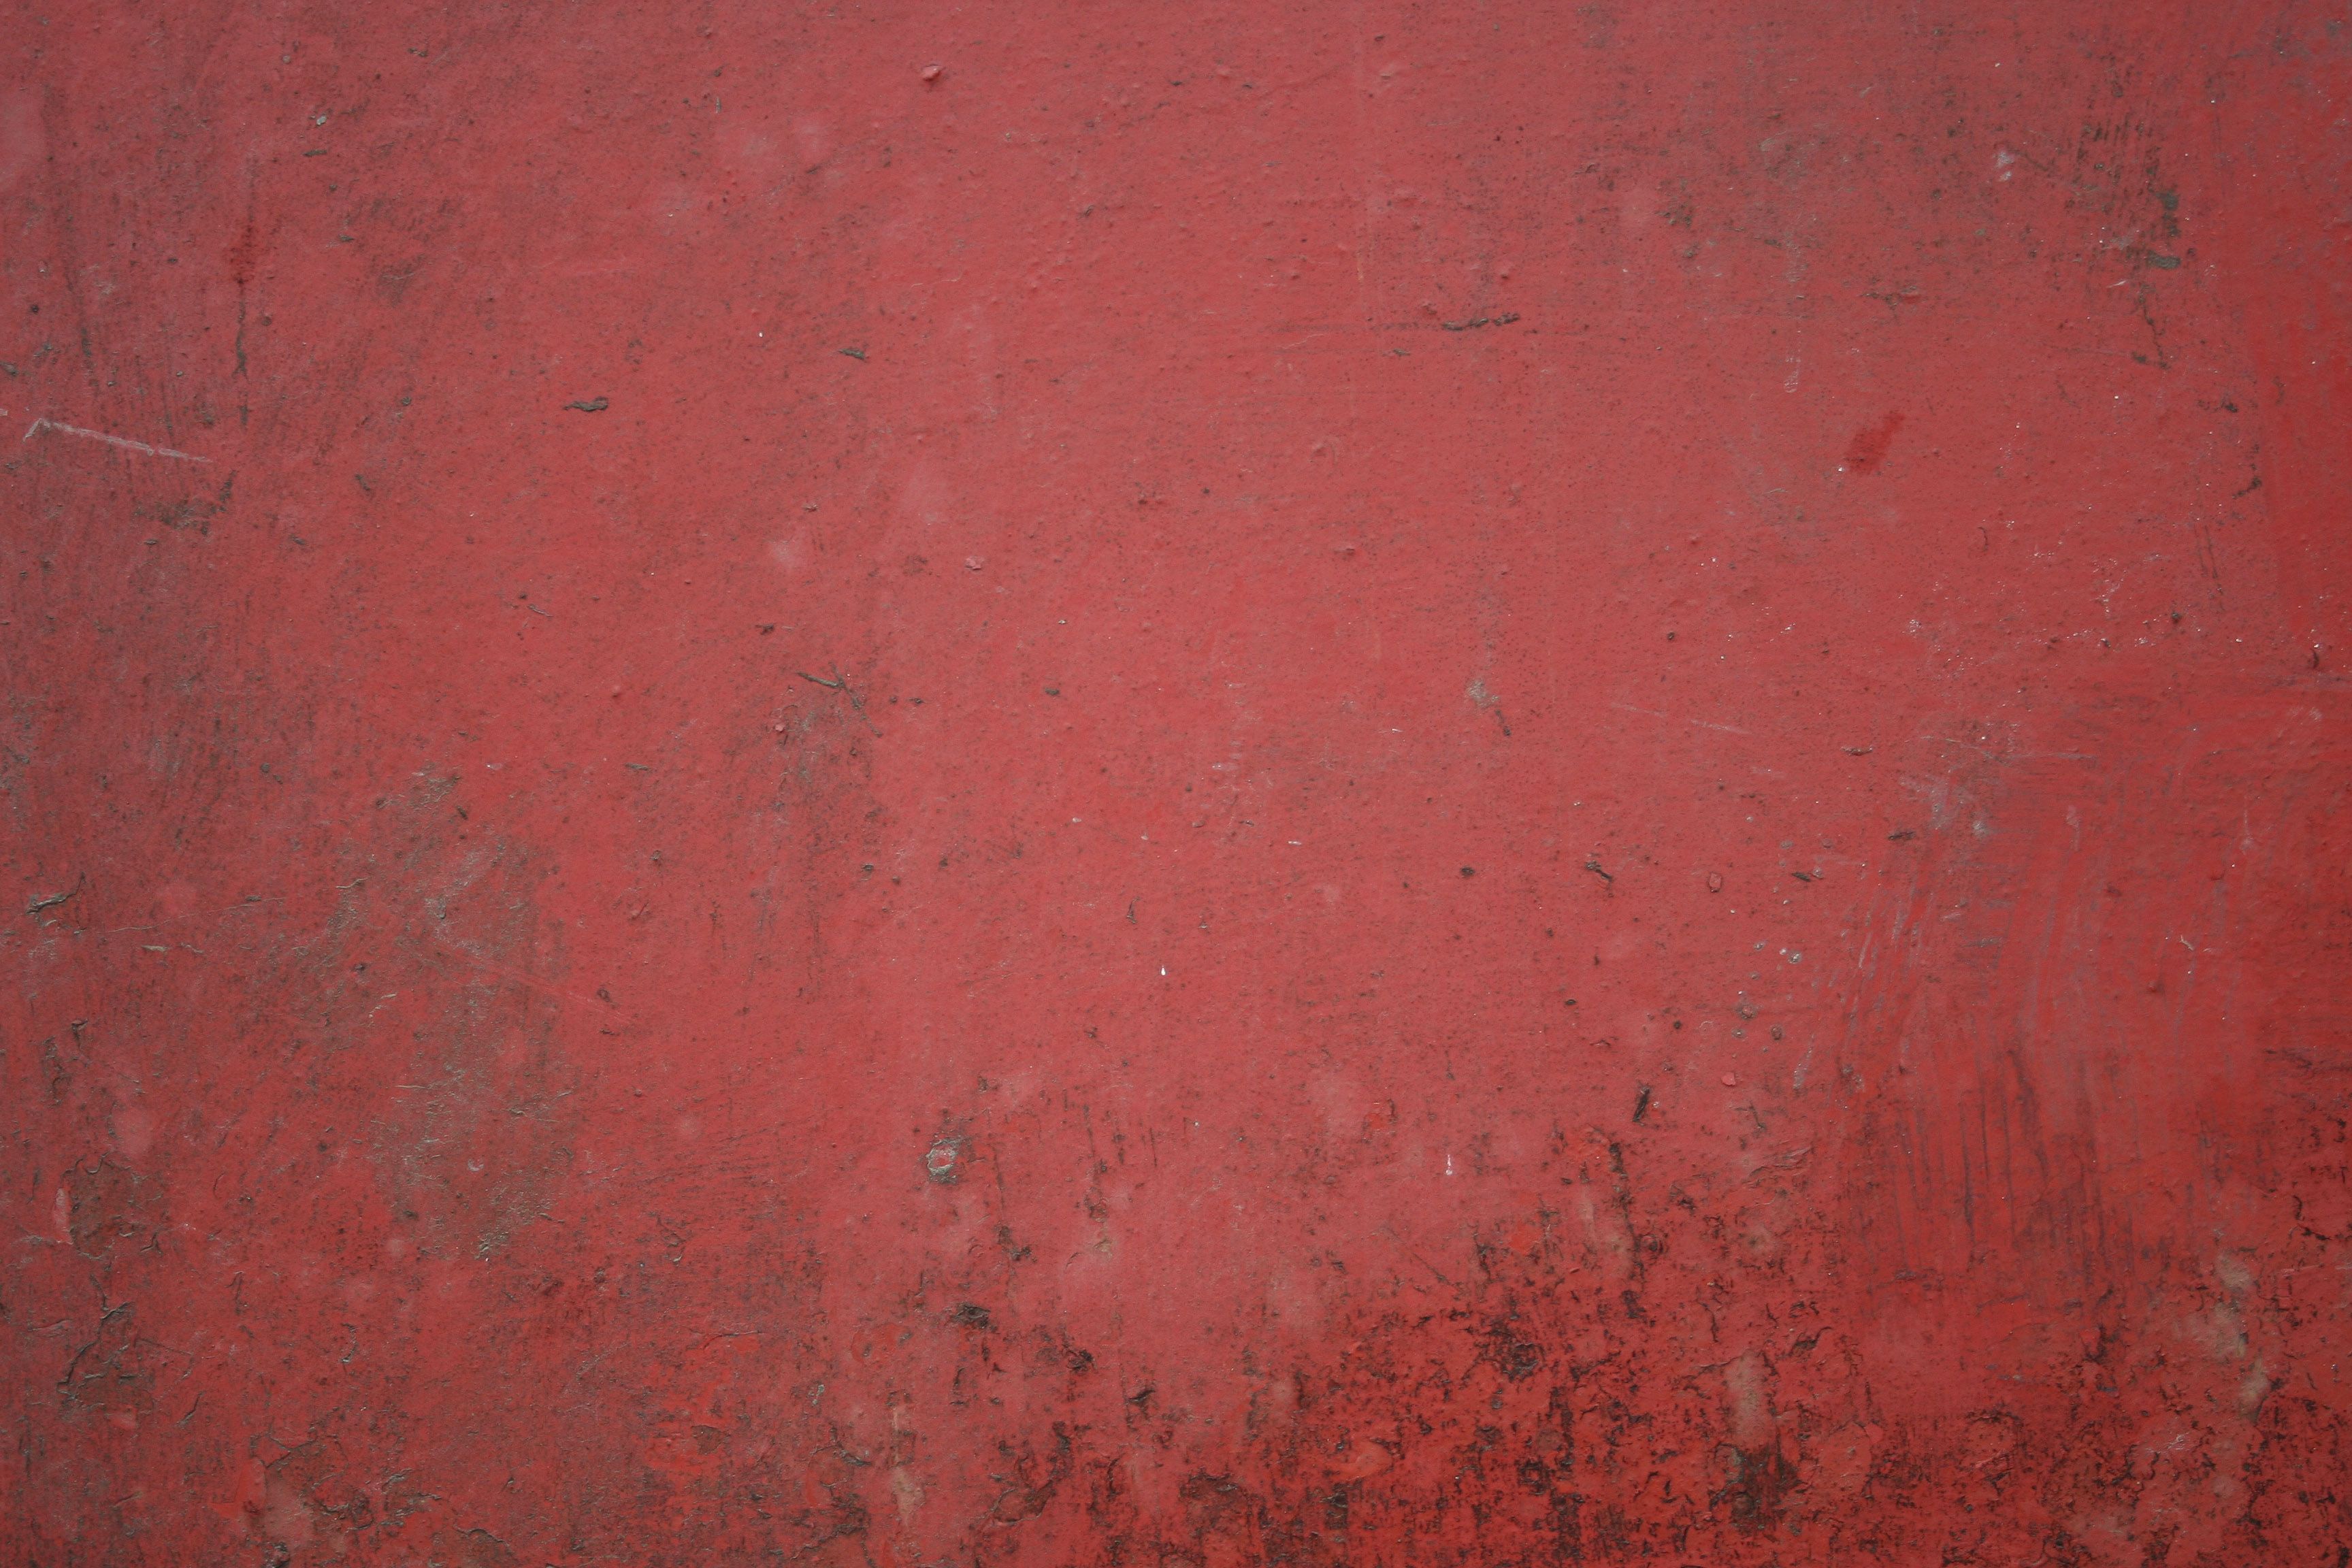 Metal Reds Painted Metal Texture Backgrounds | Textures | Pinterest ...